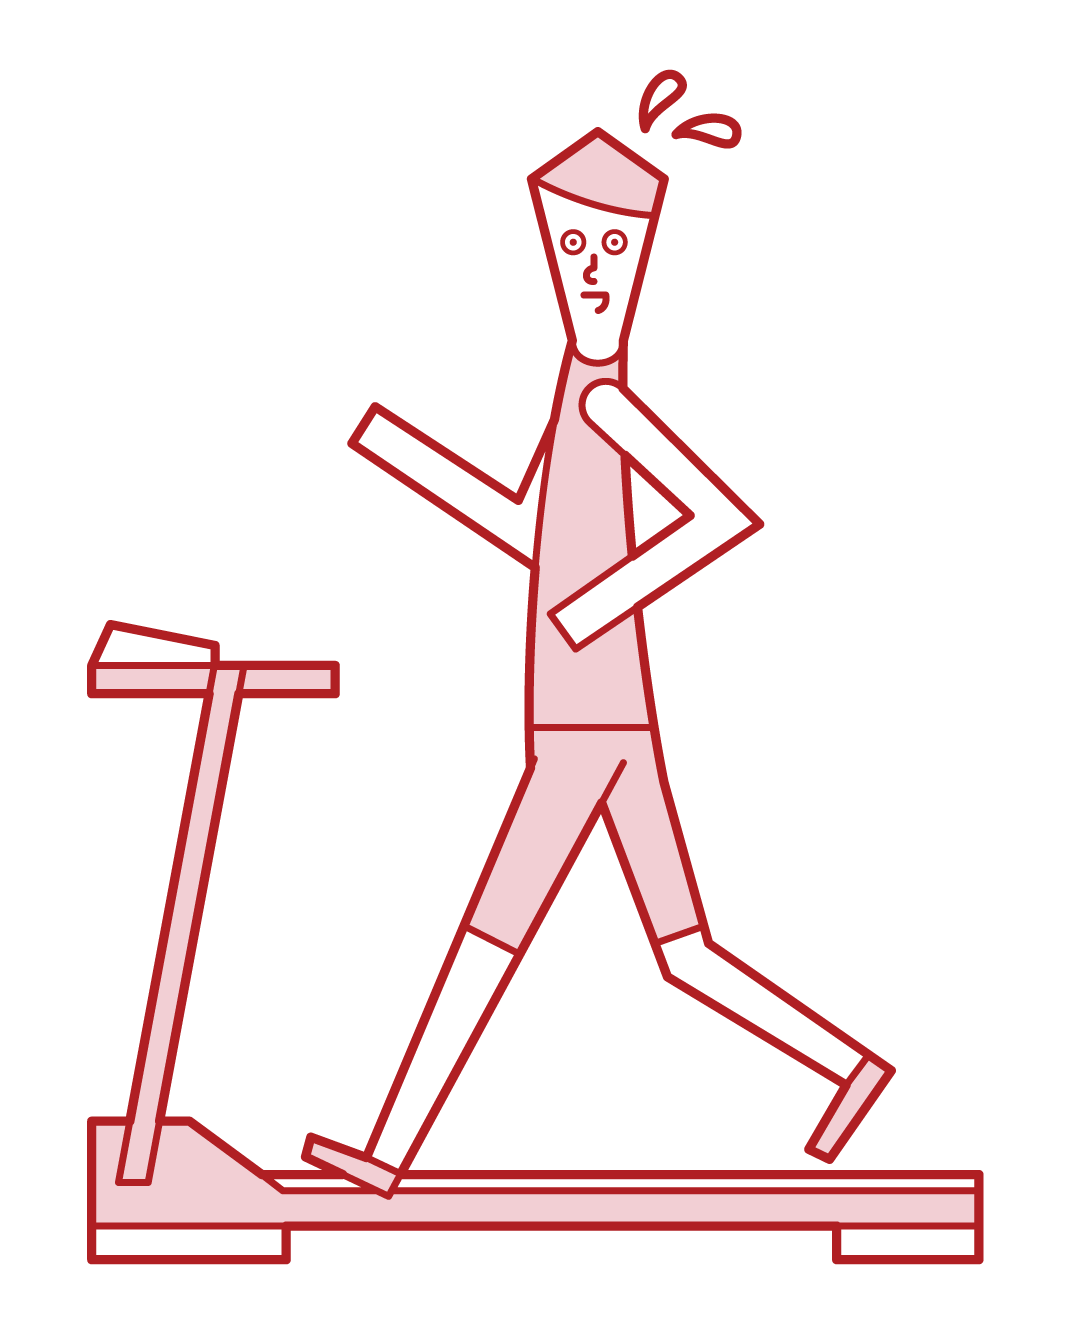 Illustration of a man running on a running machine